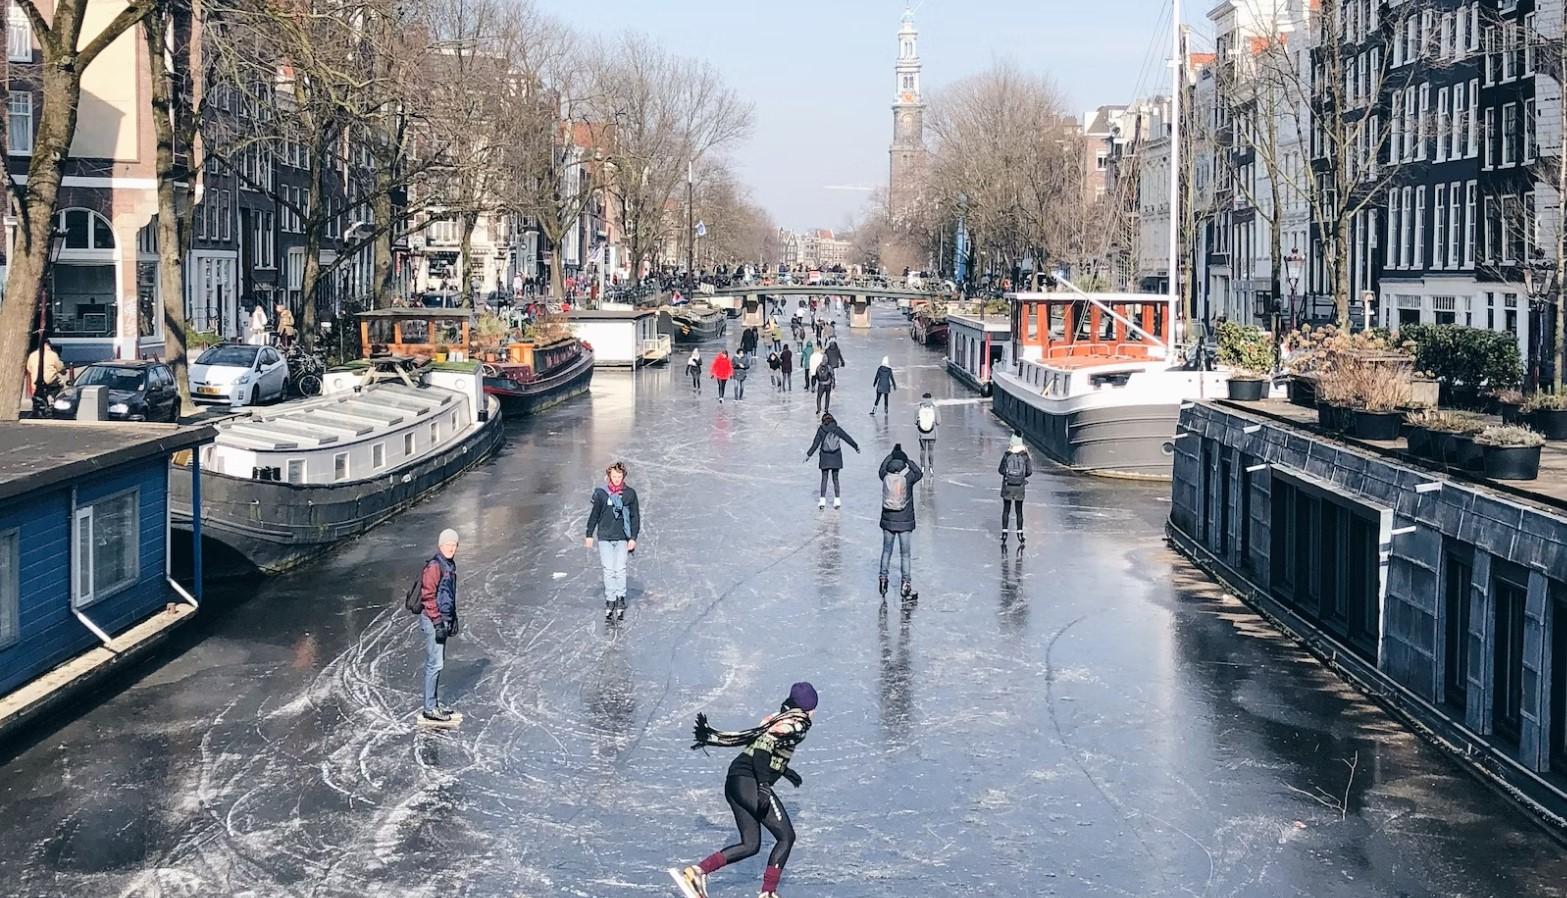 Amsterdam in winter season